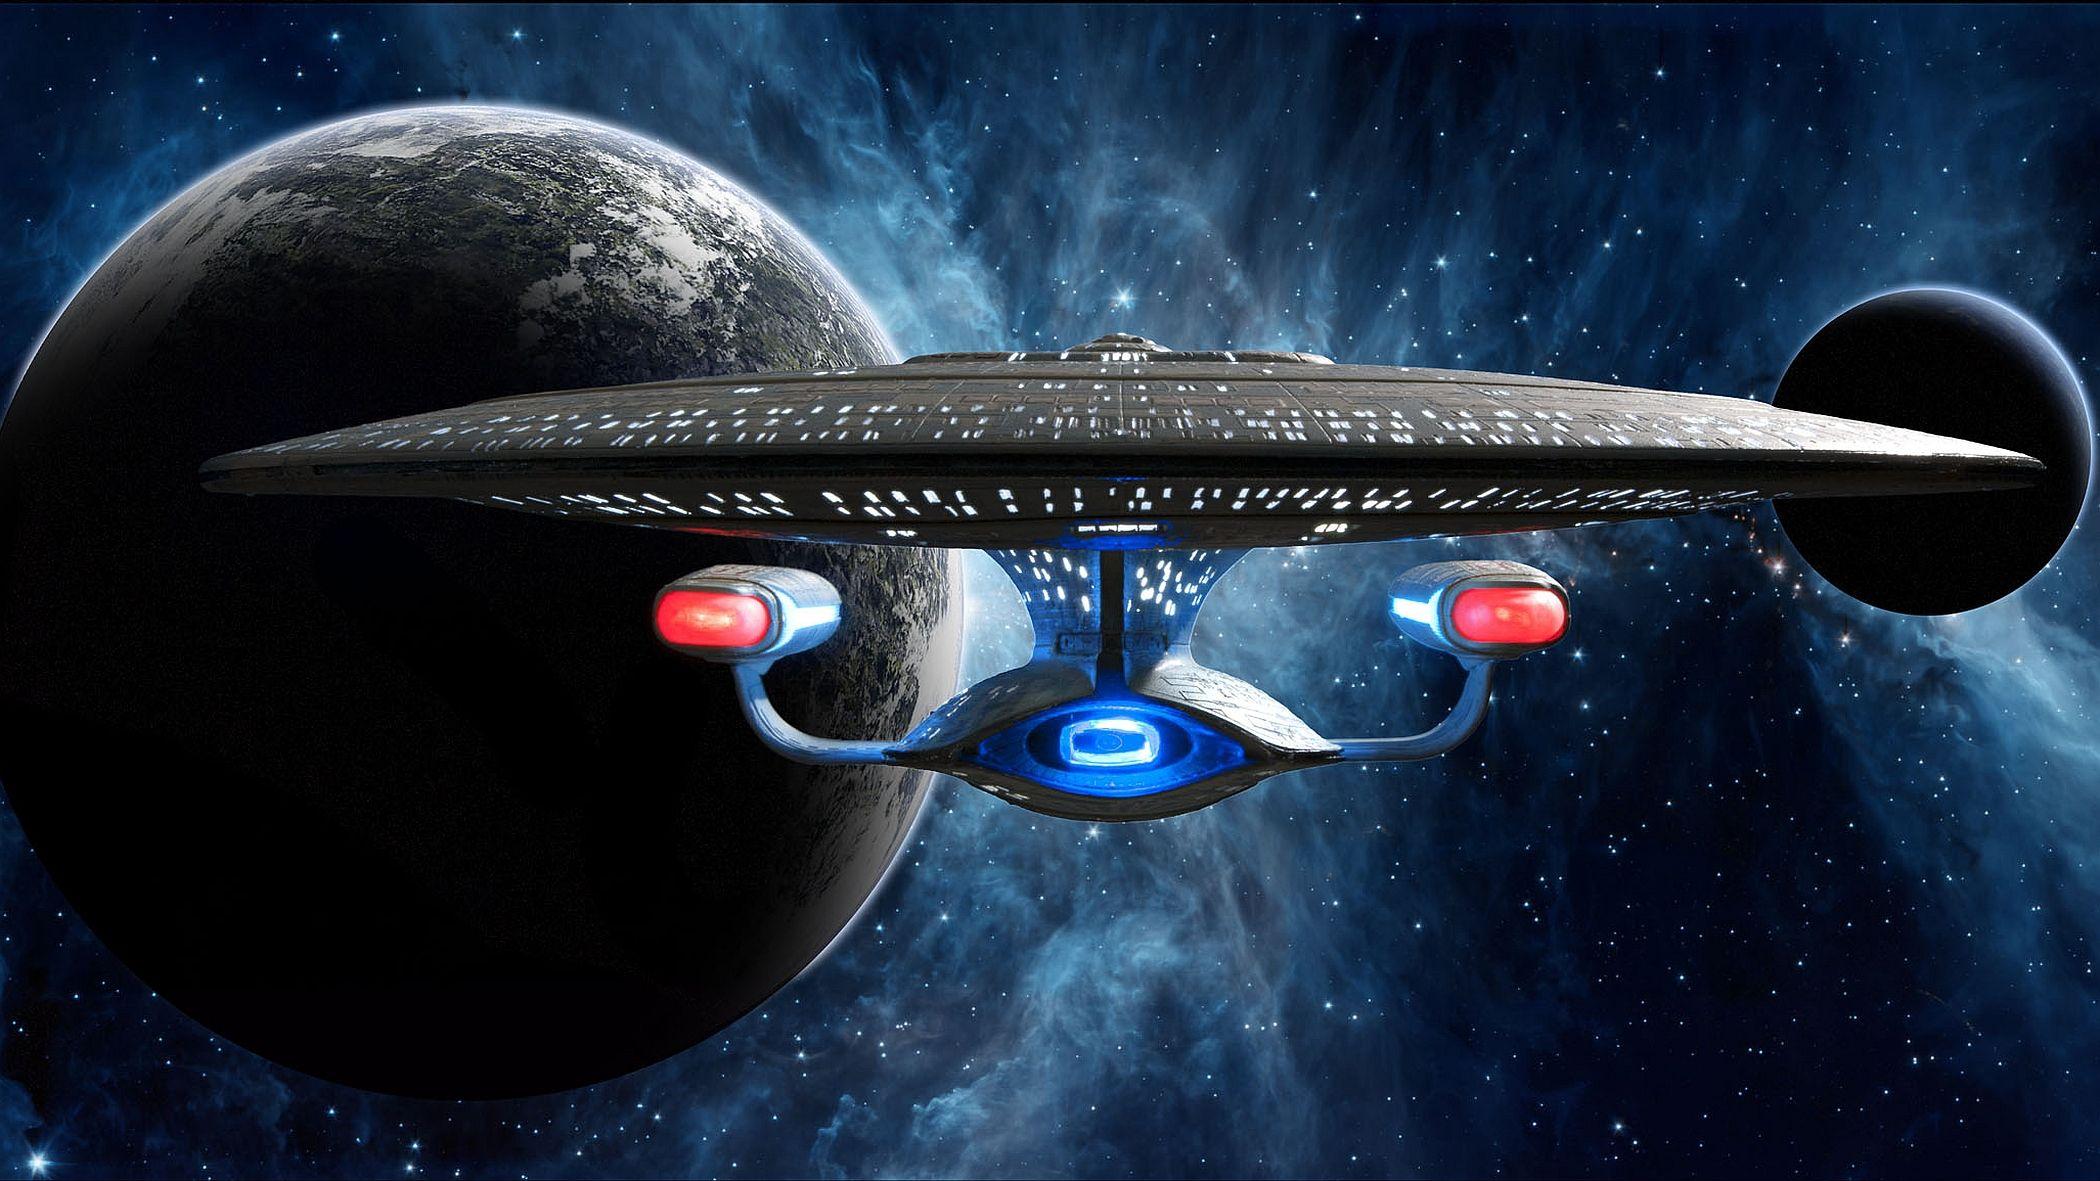 Star Trek: The Next Generation Full HD Wallpaper and Background